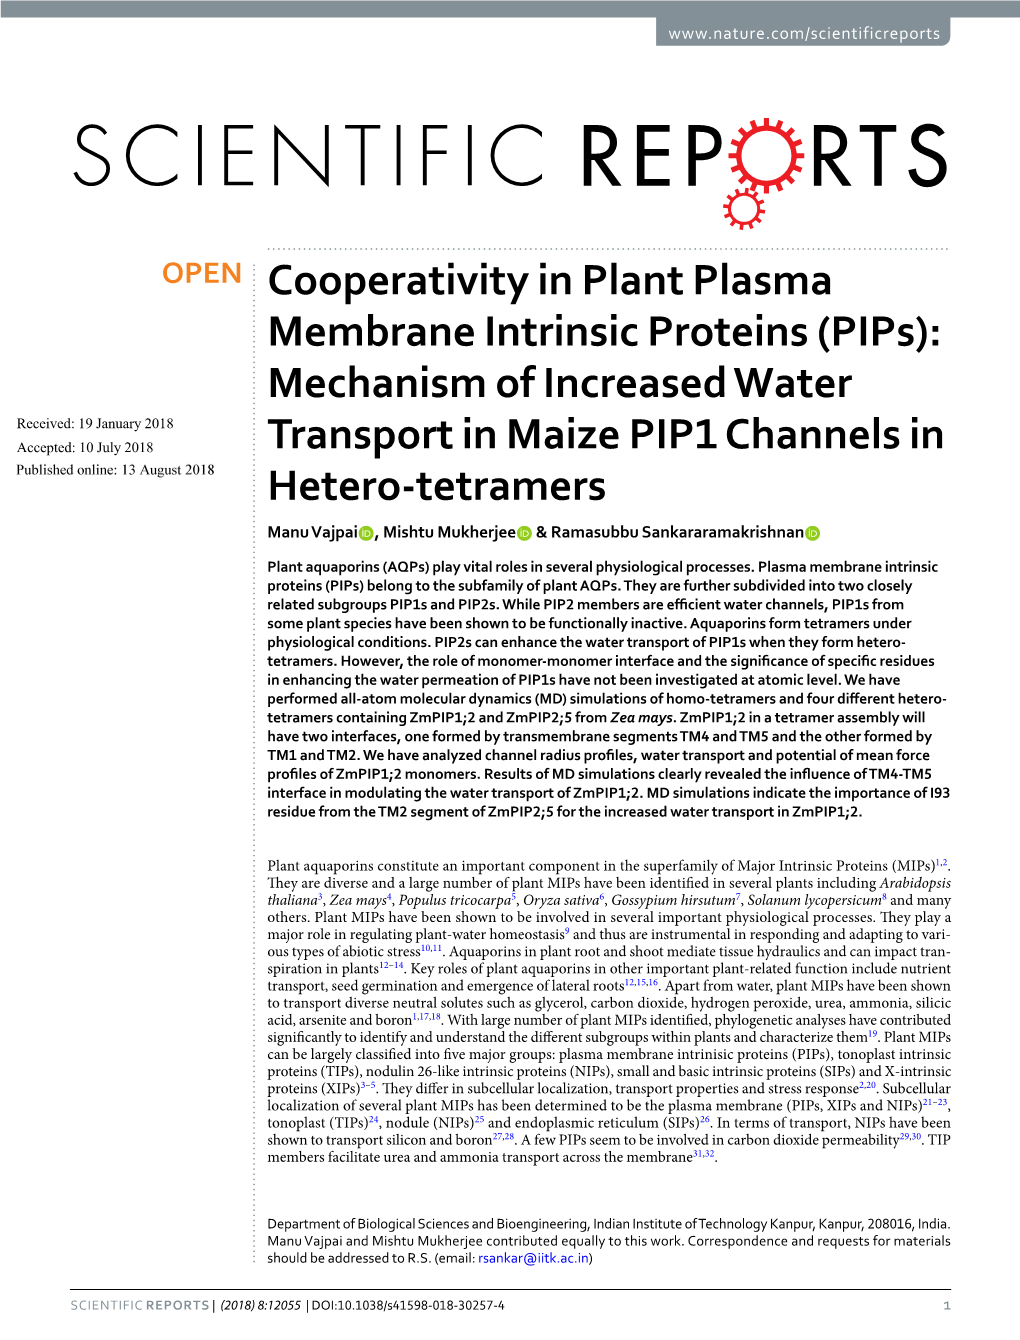 Cooperativity in Plant Plasma Membrane Intrinsic Proteins